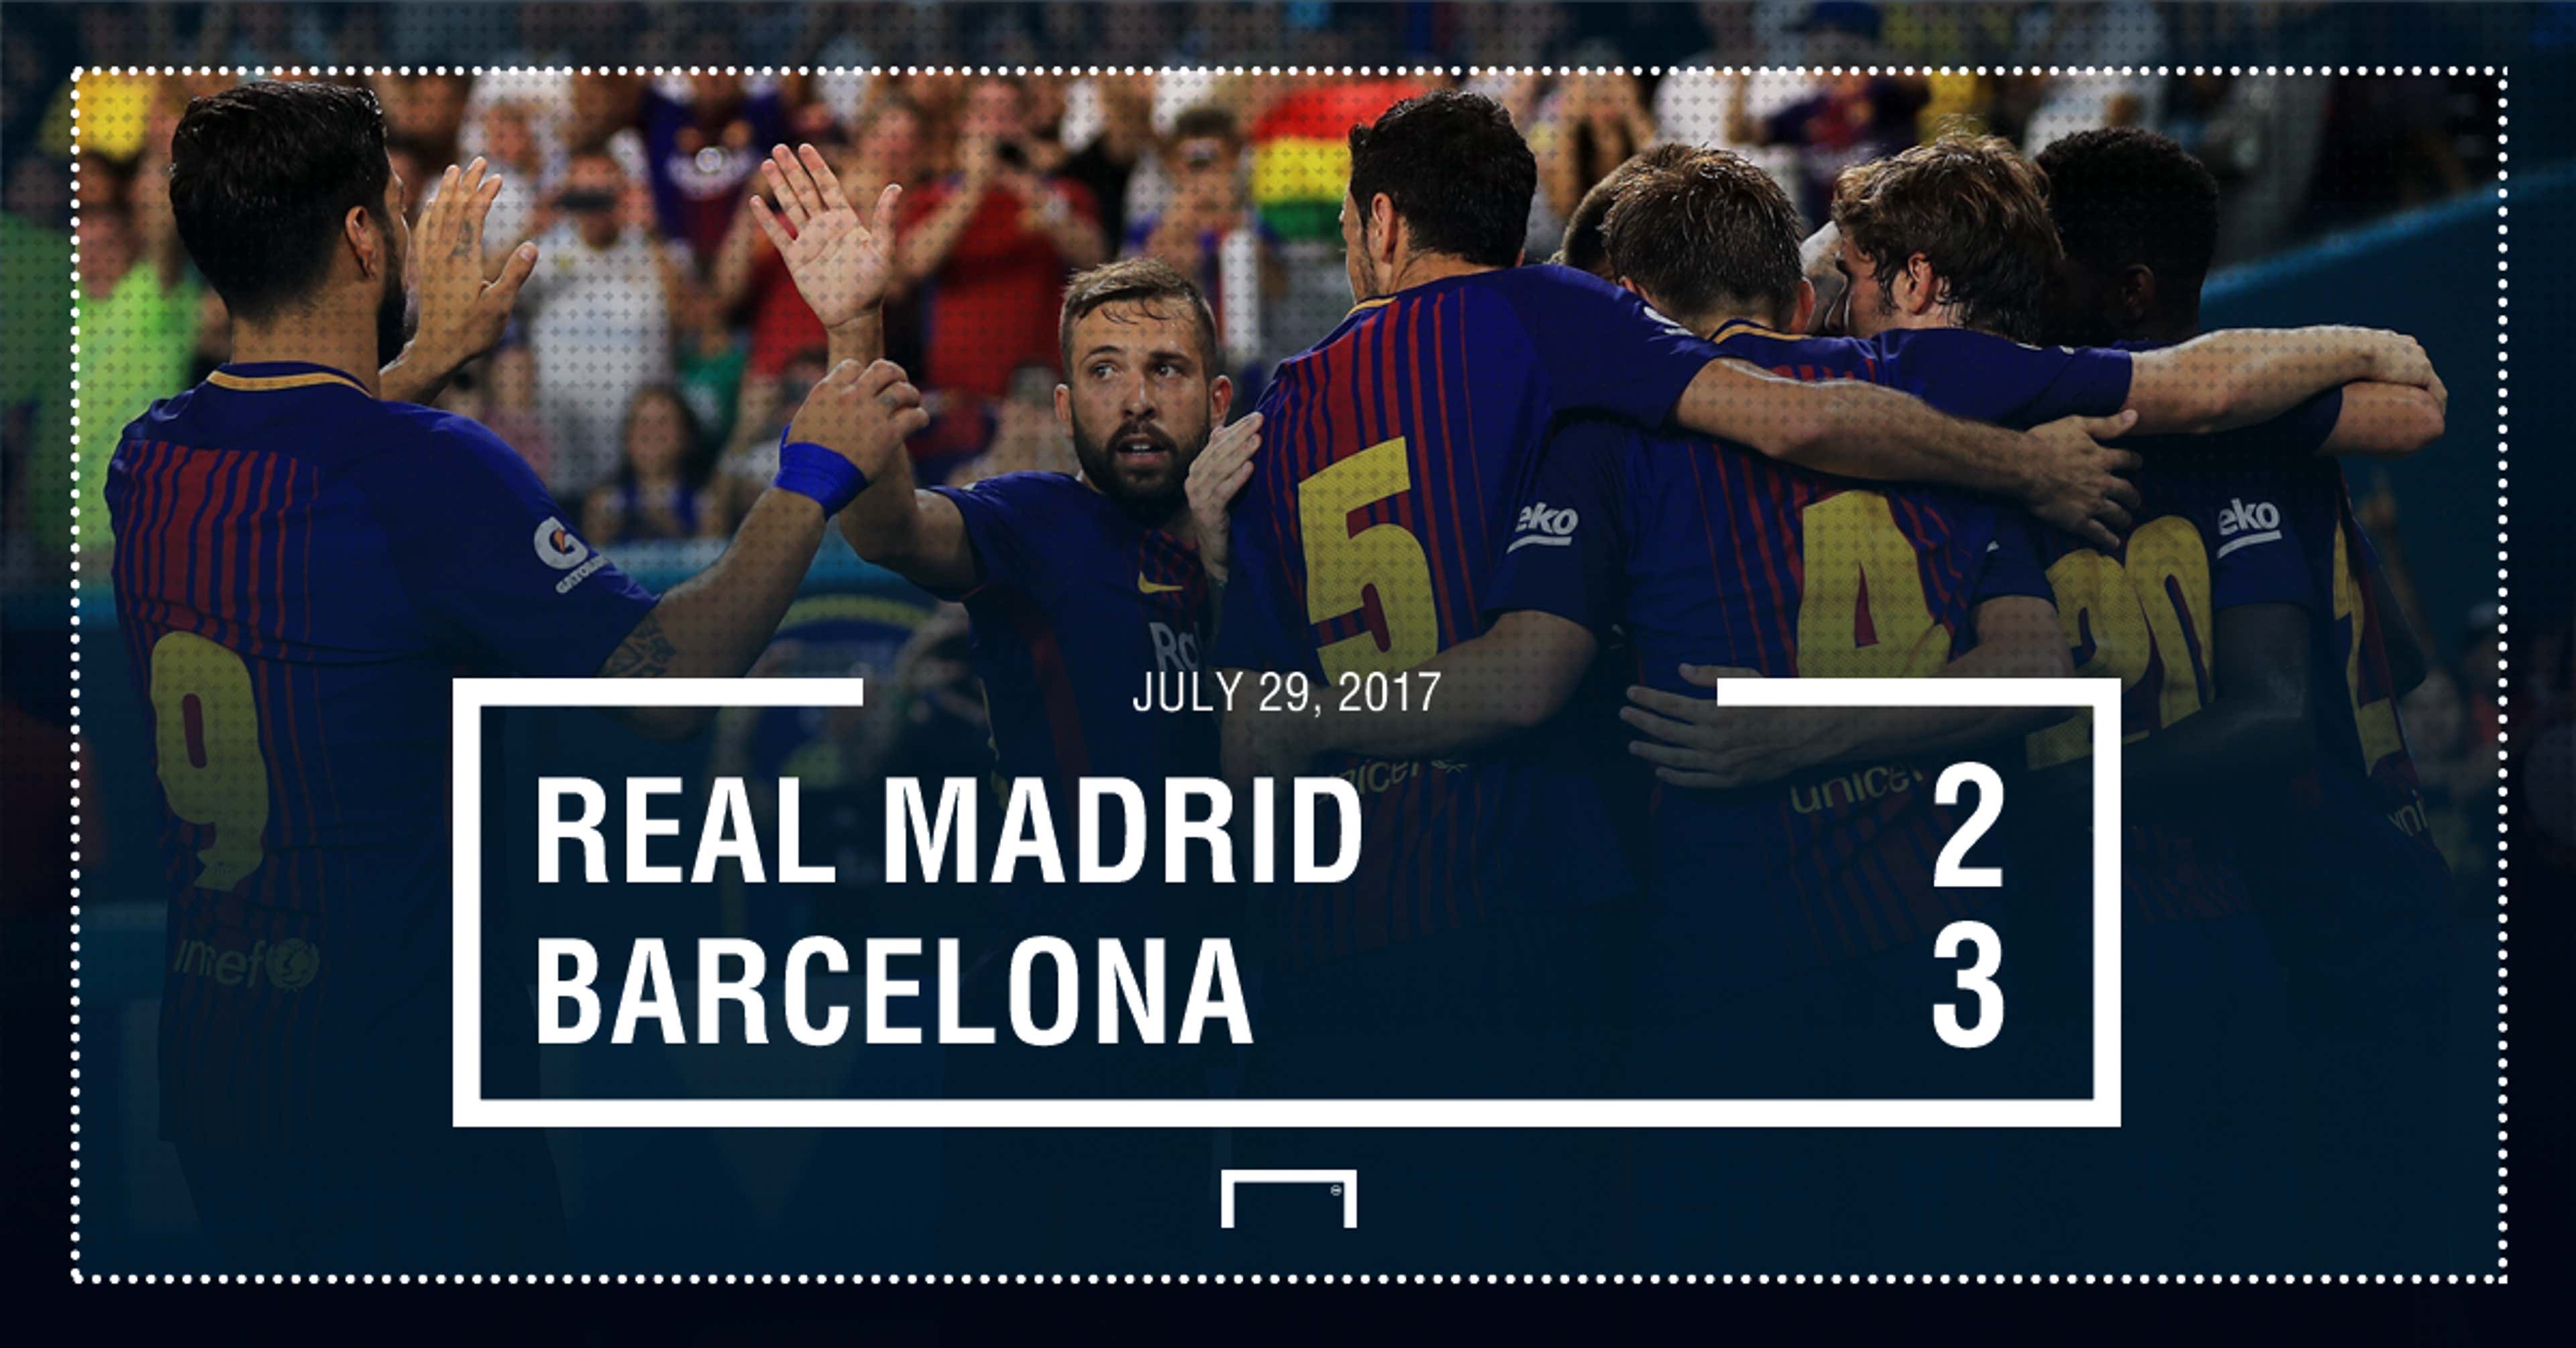 Real Madrid Barcelona score graphic